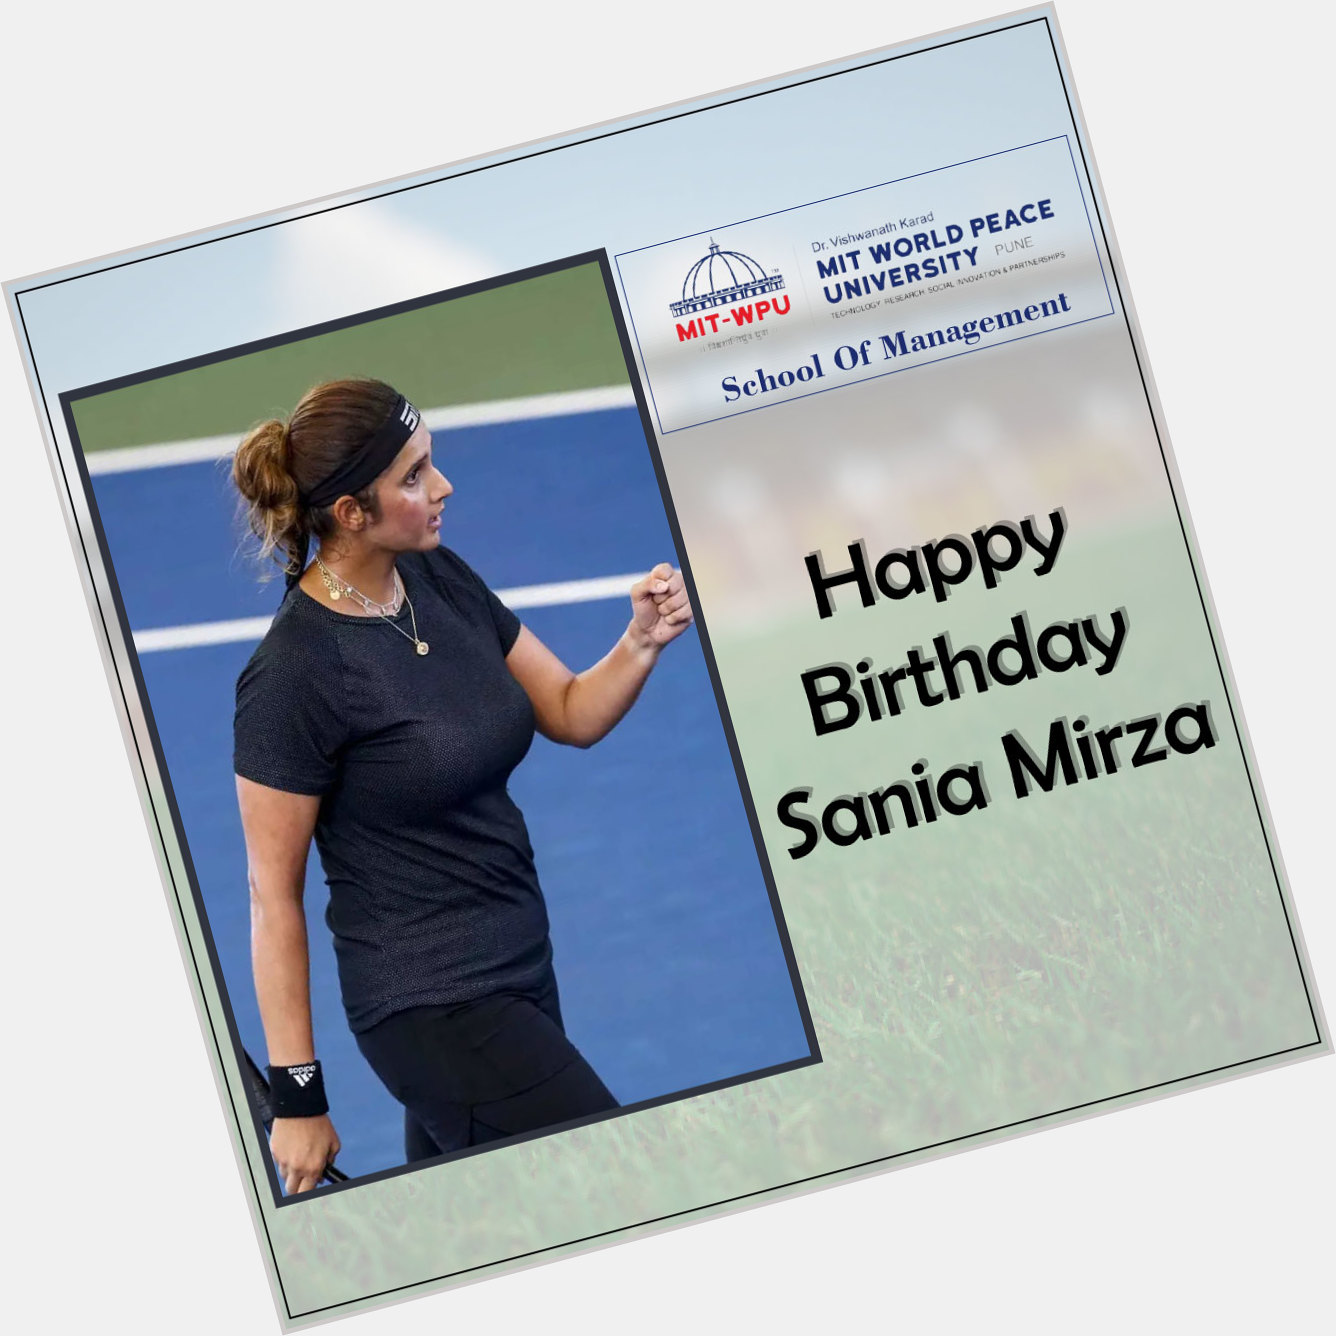 SoM(UG) wishes Sania Mirza a very Happy Birthday 